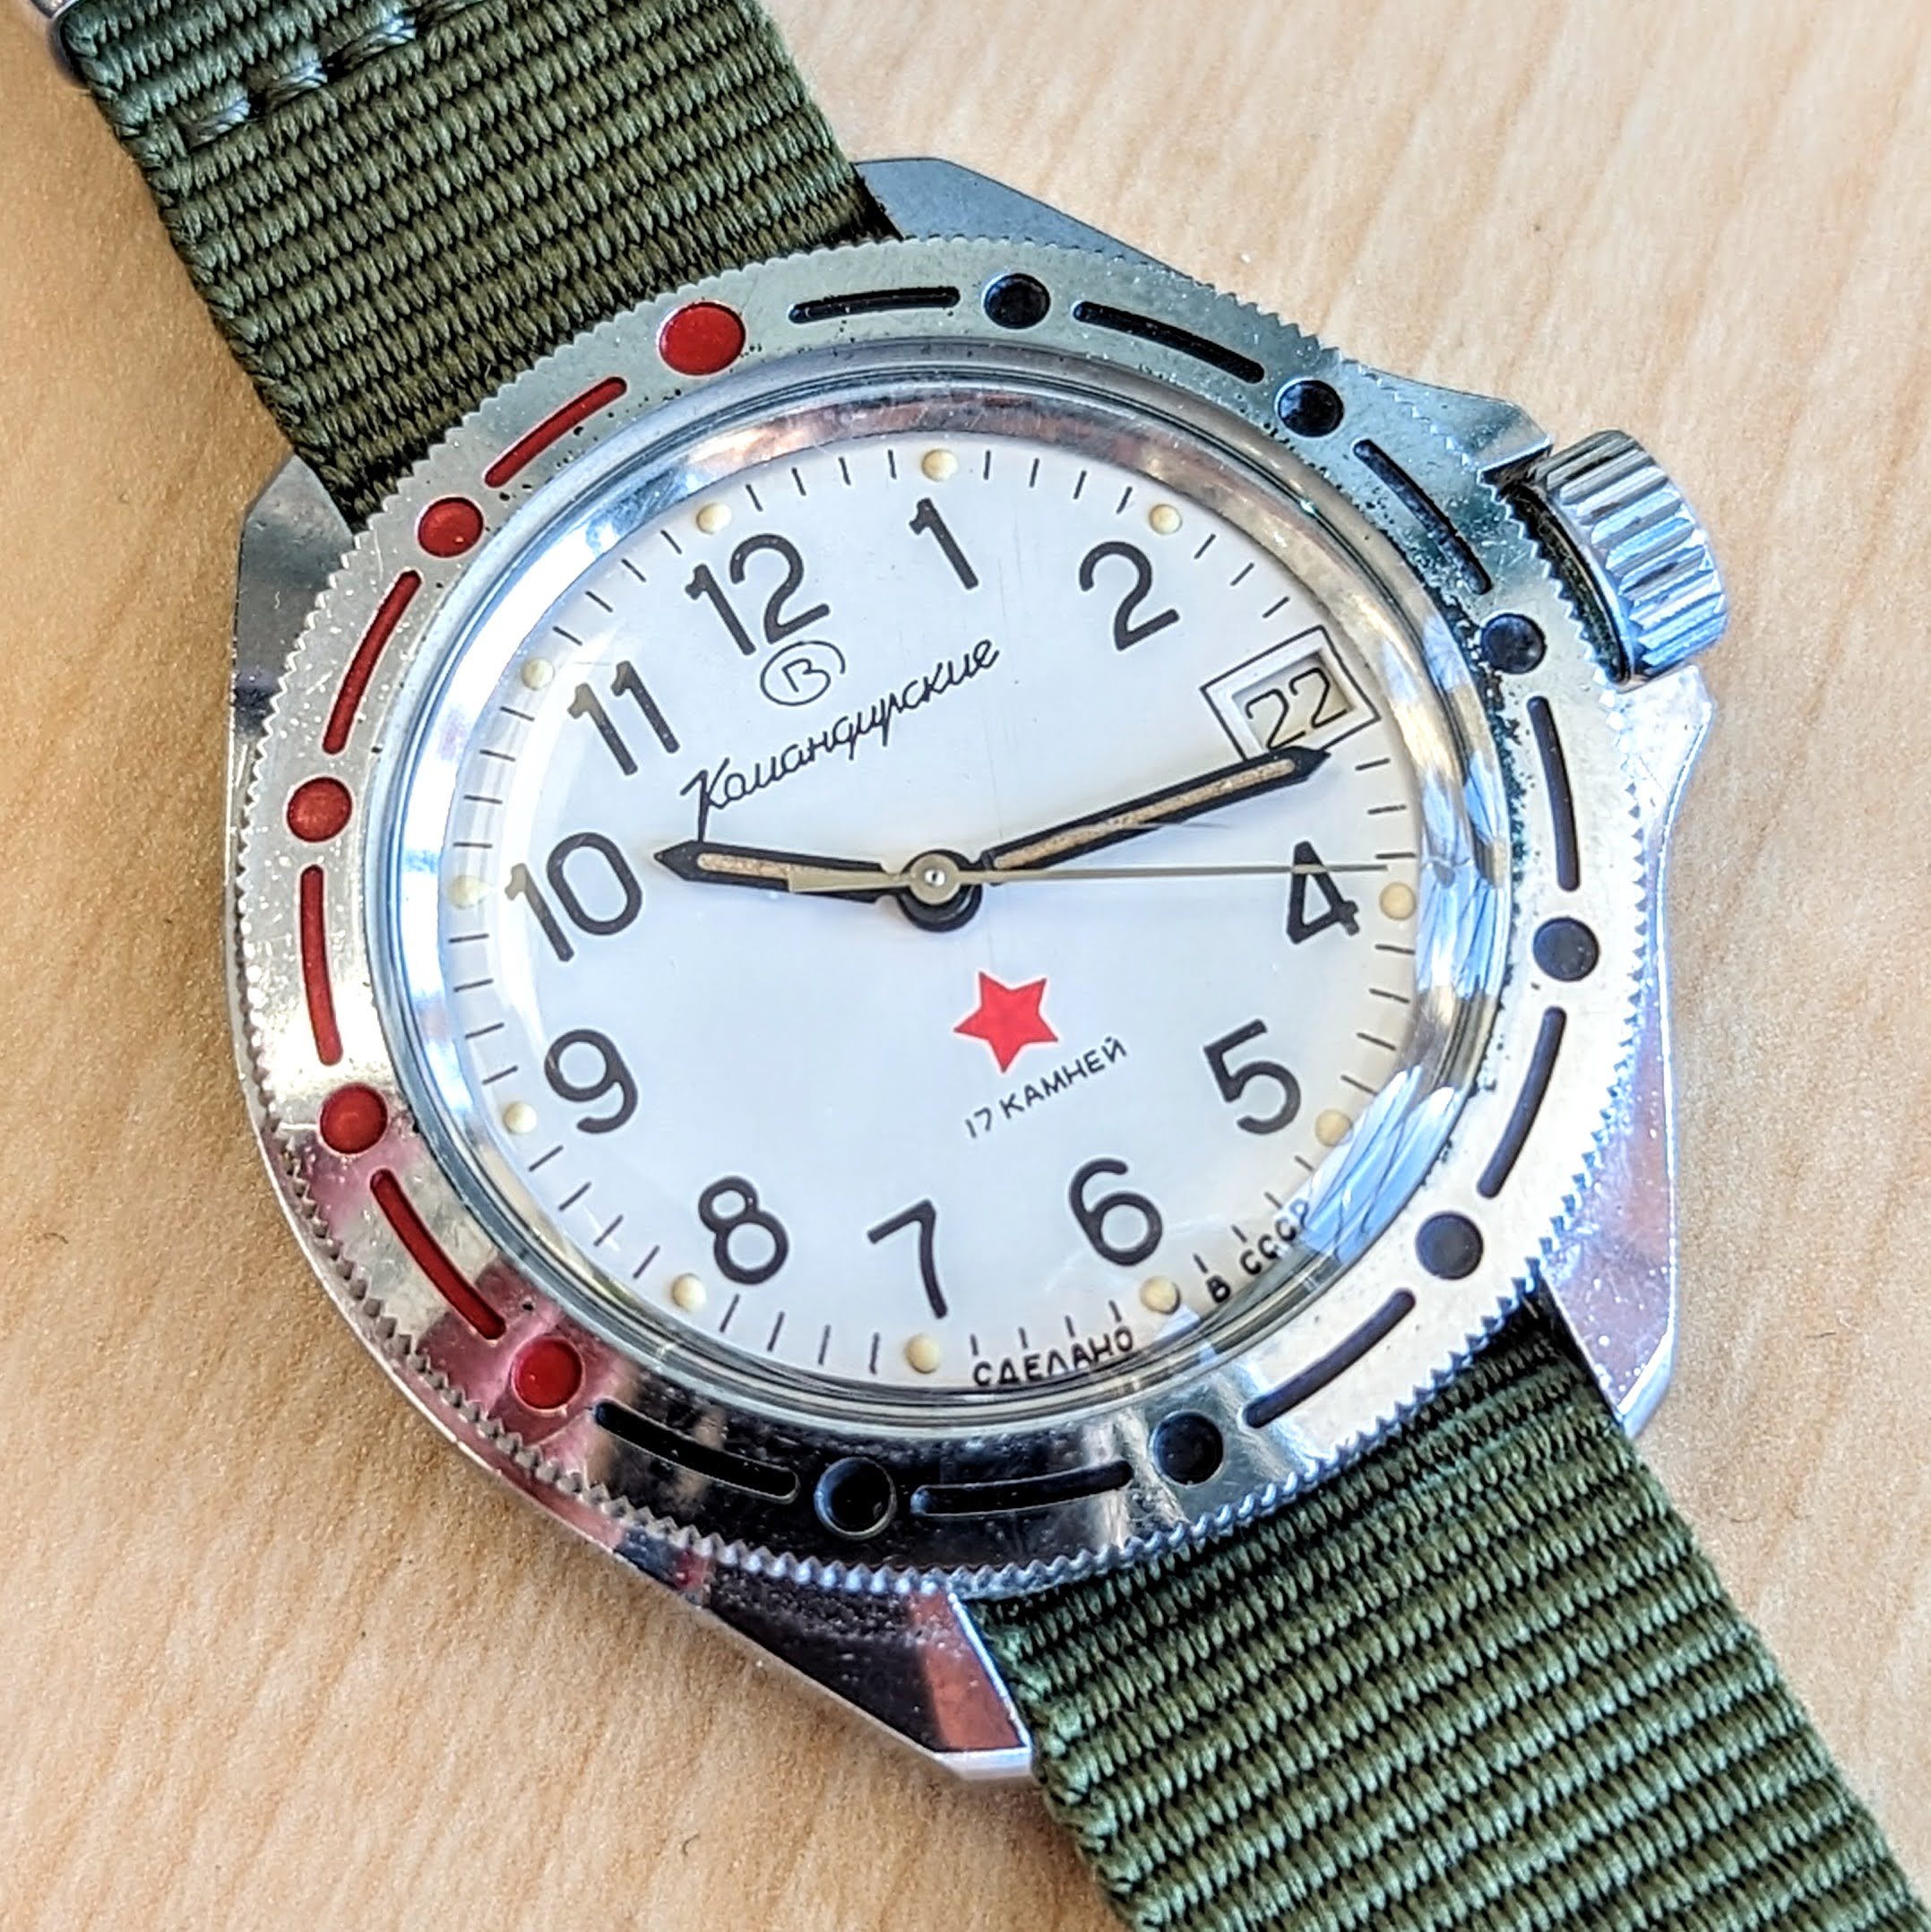 VOSTOK Komandirskie "Red Star" Diver Watch 17 Jewels Cal. 2414A Watertight 50m - Ref. 341201 U.S.S.R. Made